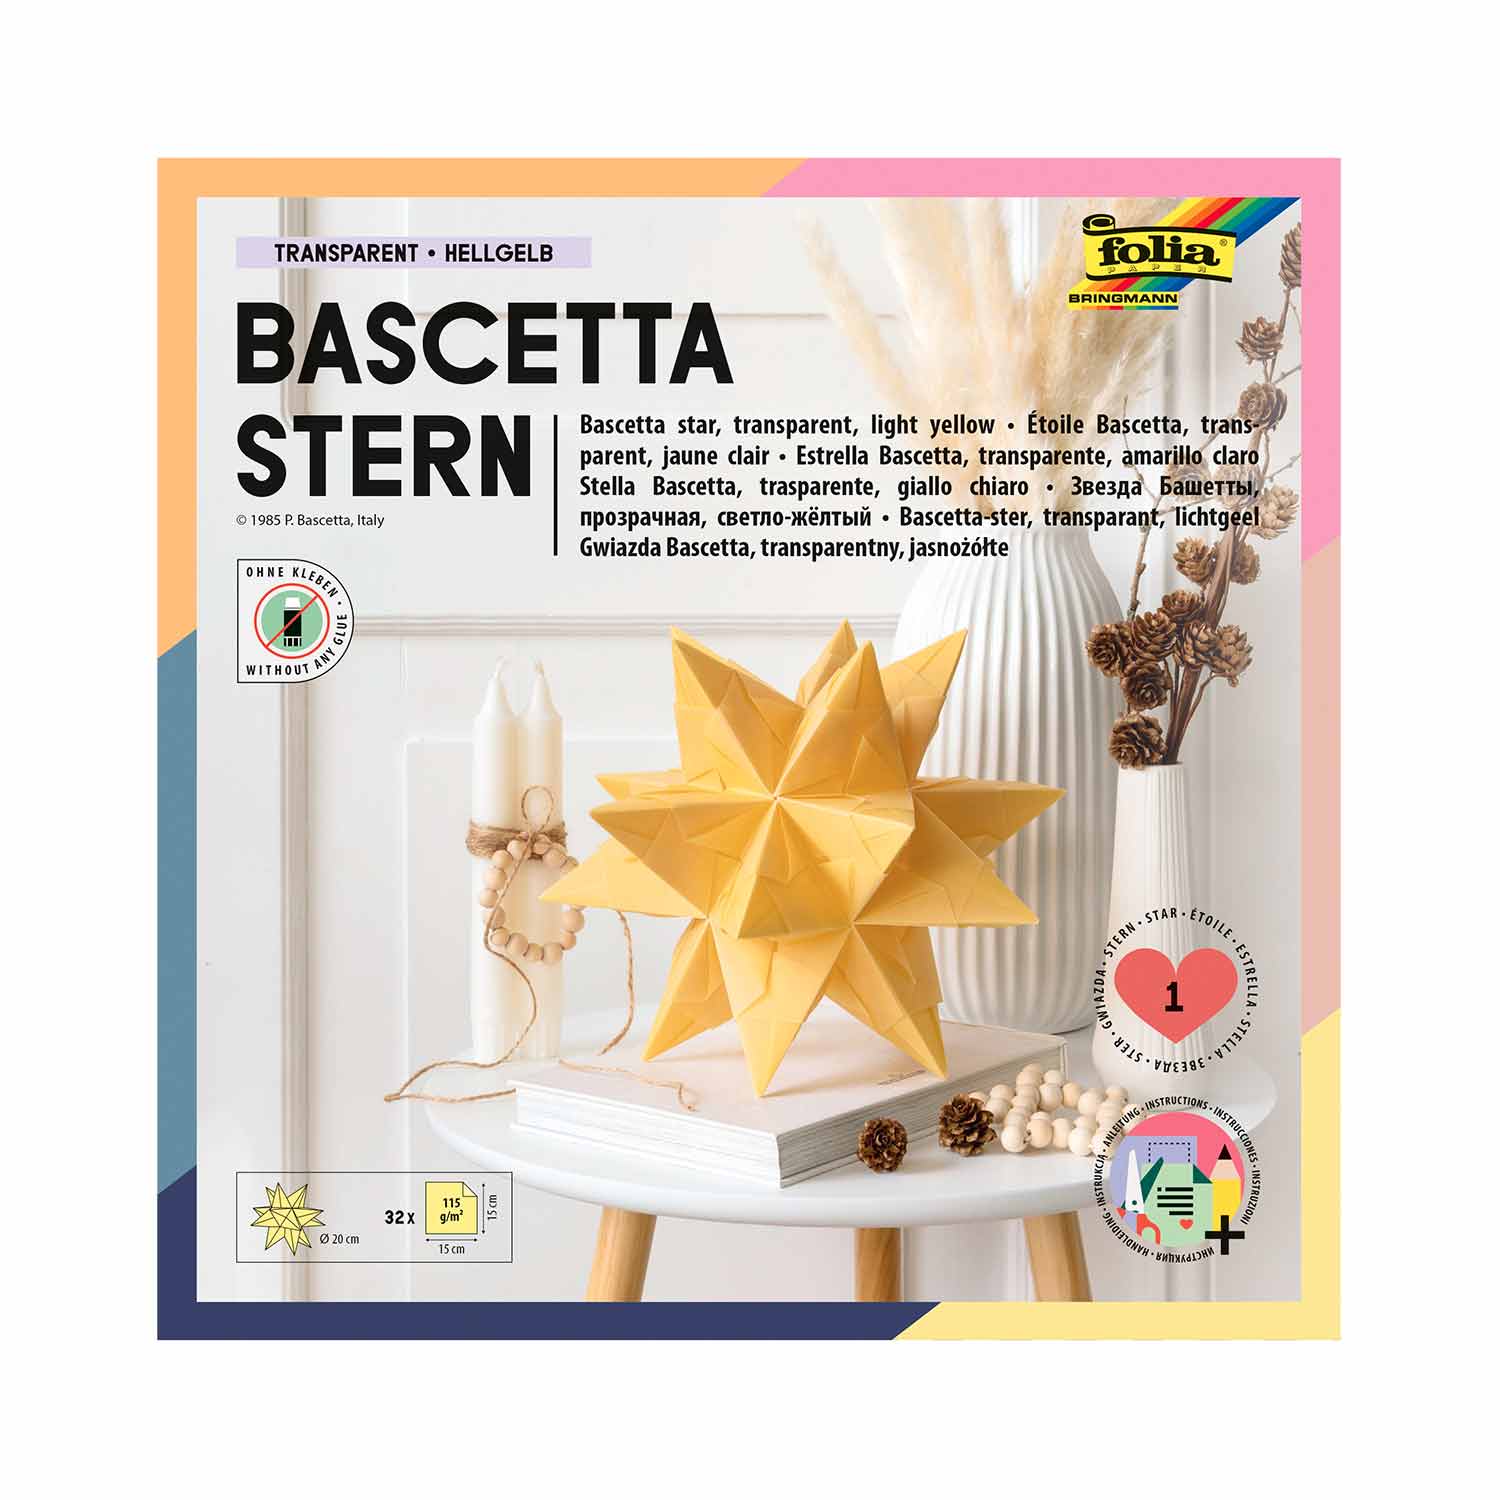 Bascetta-Stern Bastelset 32 Blatt 15 x 15 cm Transparentpapier hellgelb